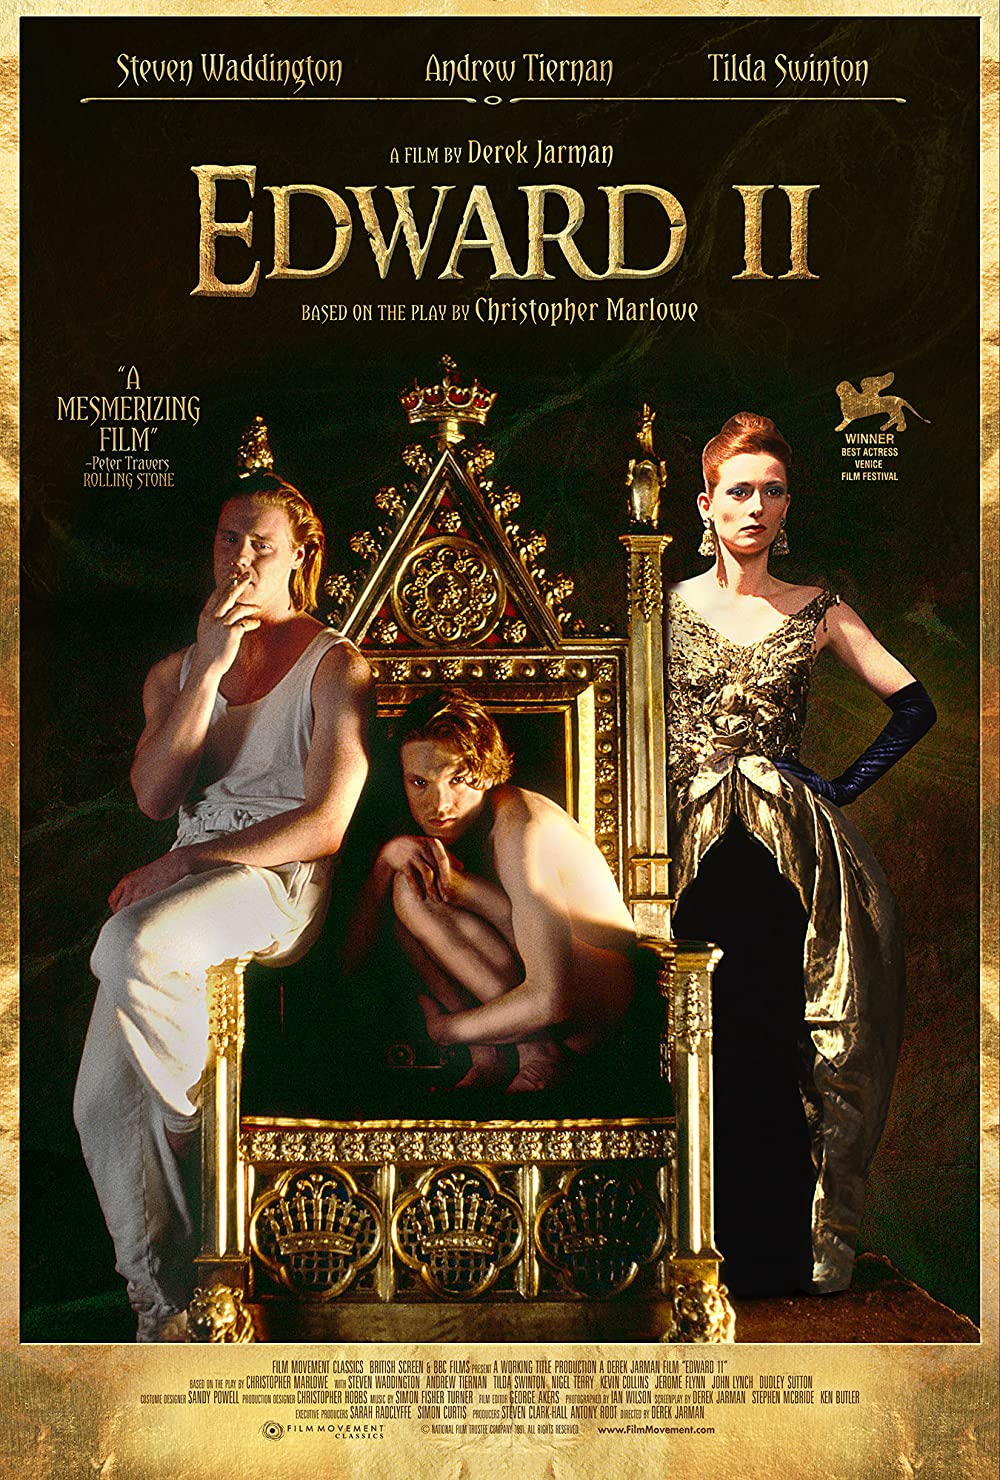 Filmbeschreibung zu Edward II